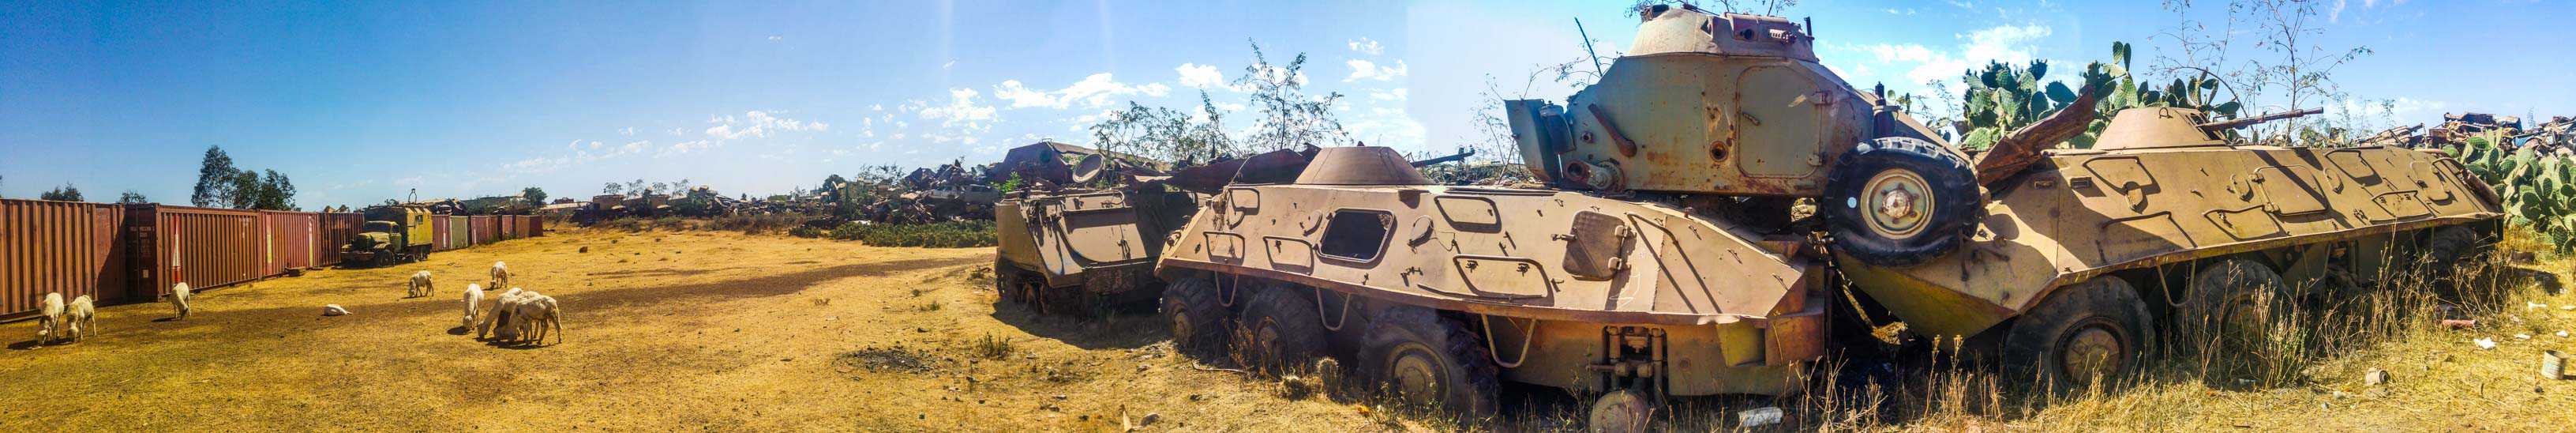 Asmara Tank Graveyard